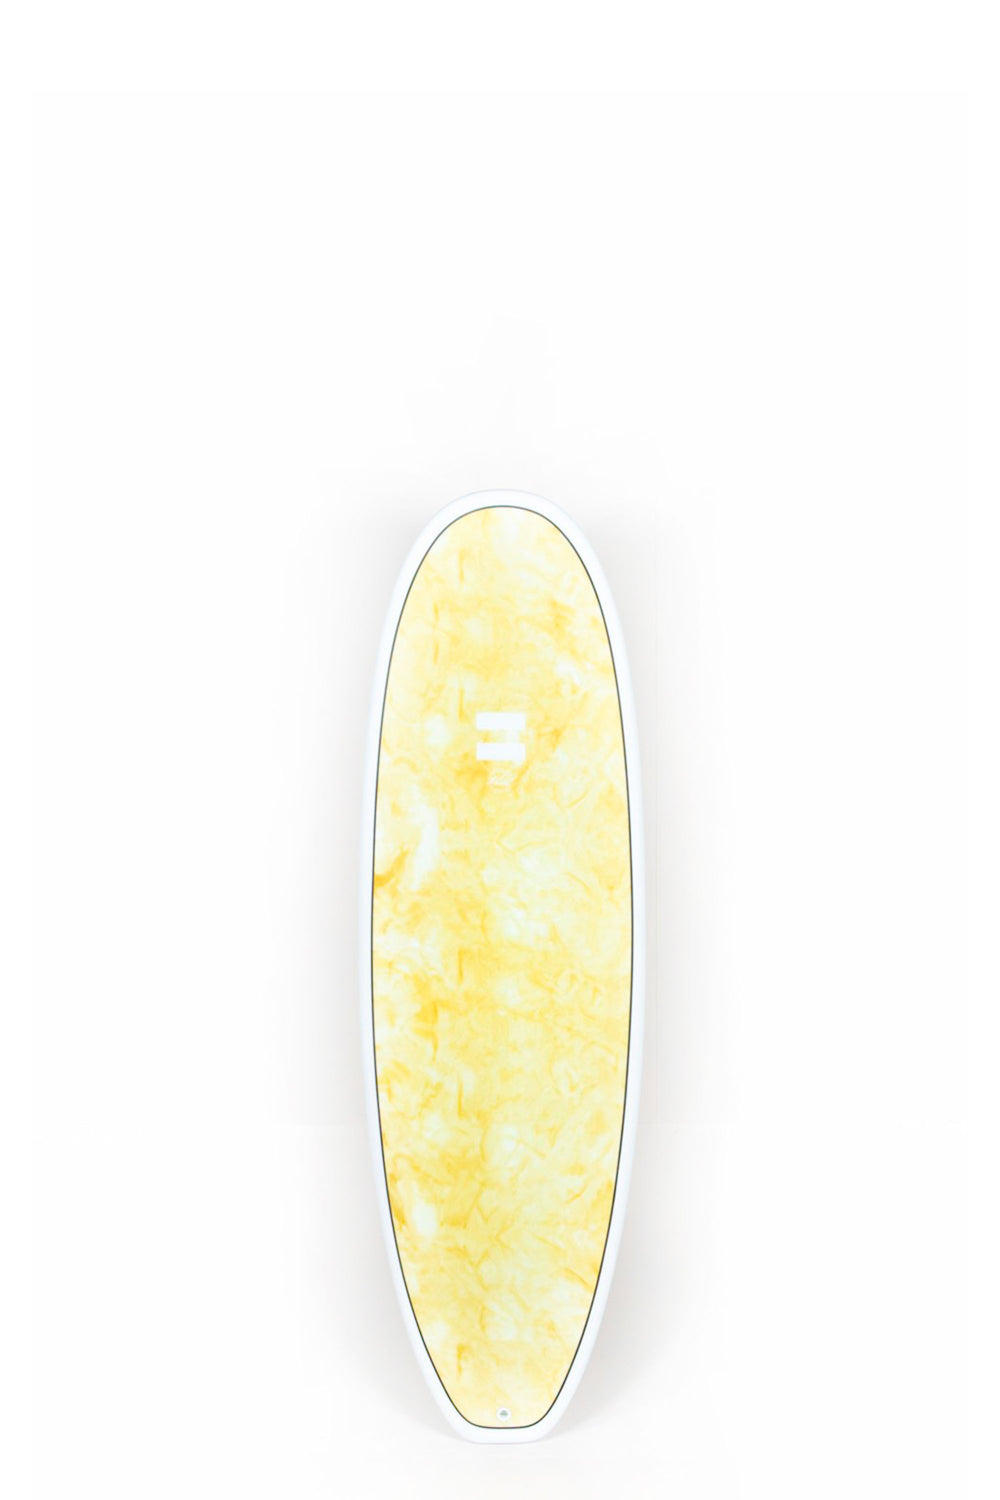 Pukas Surf Shop - Indio Endurance - PLUS Swirl Effect Yellow - 6´6